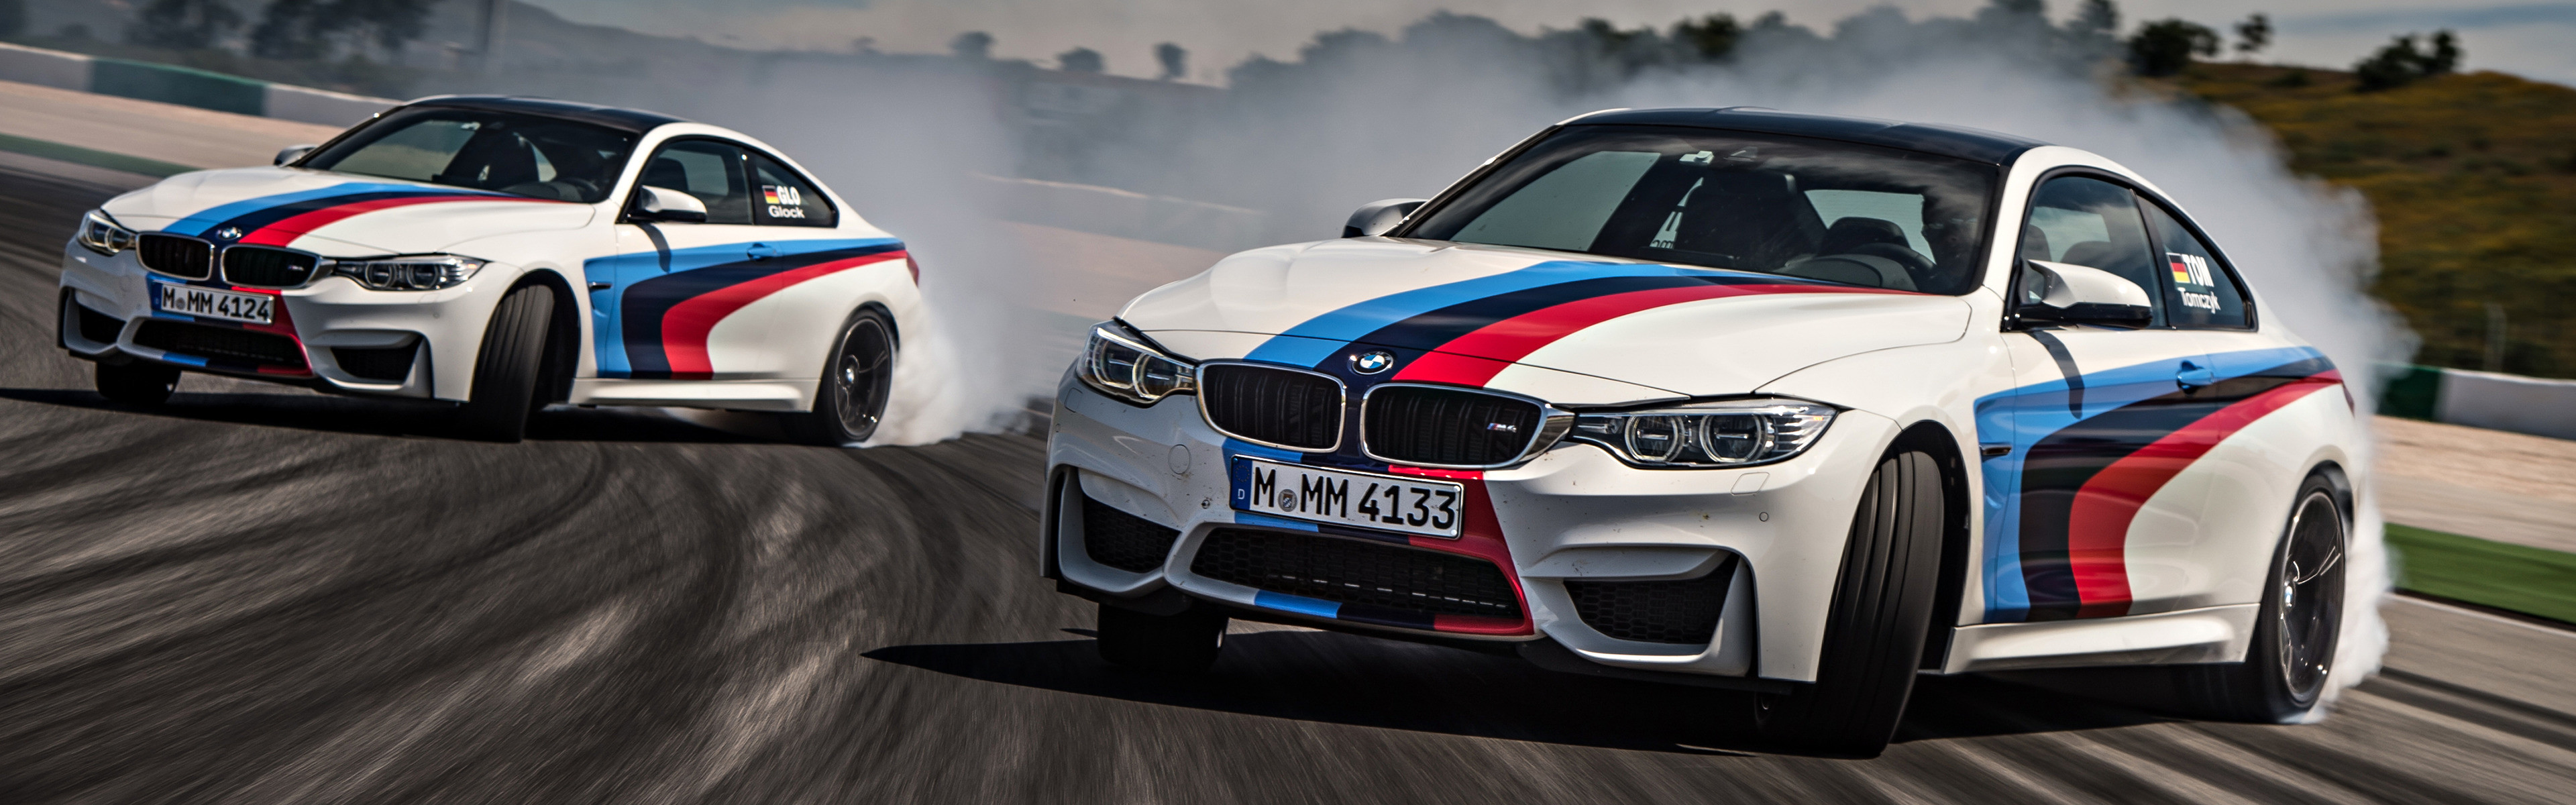 3840x1200 bmw m4 race tracks drifting car vehicle motion blur smoke wallpaper and  background